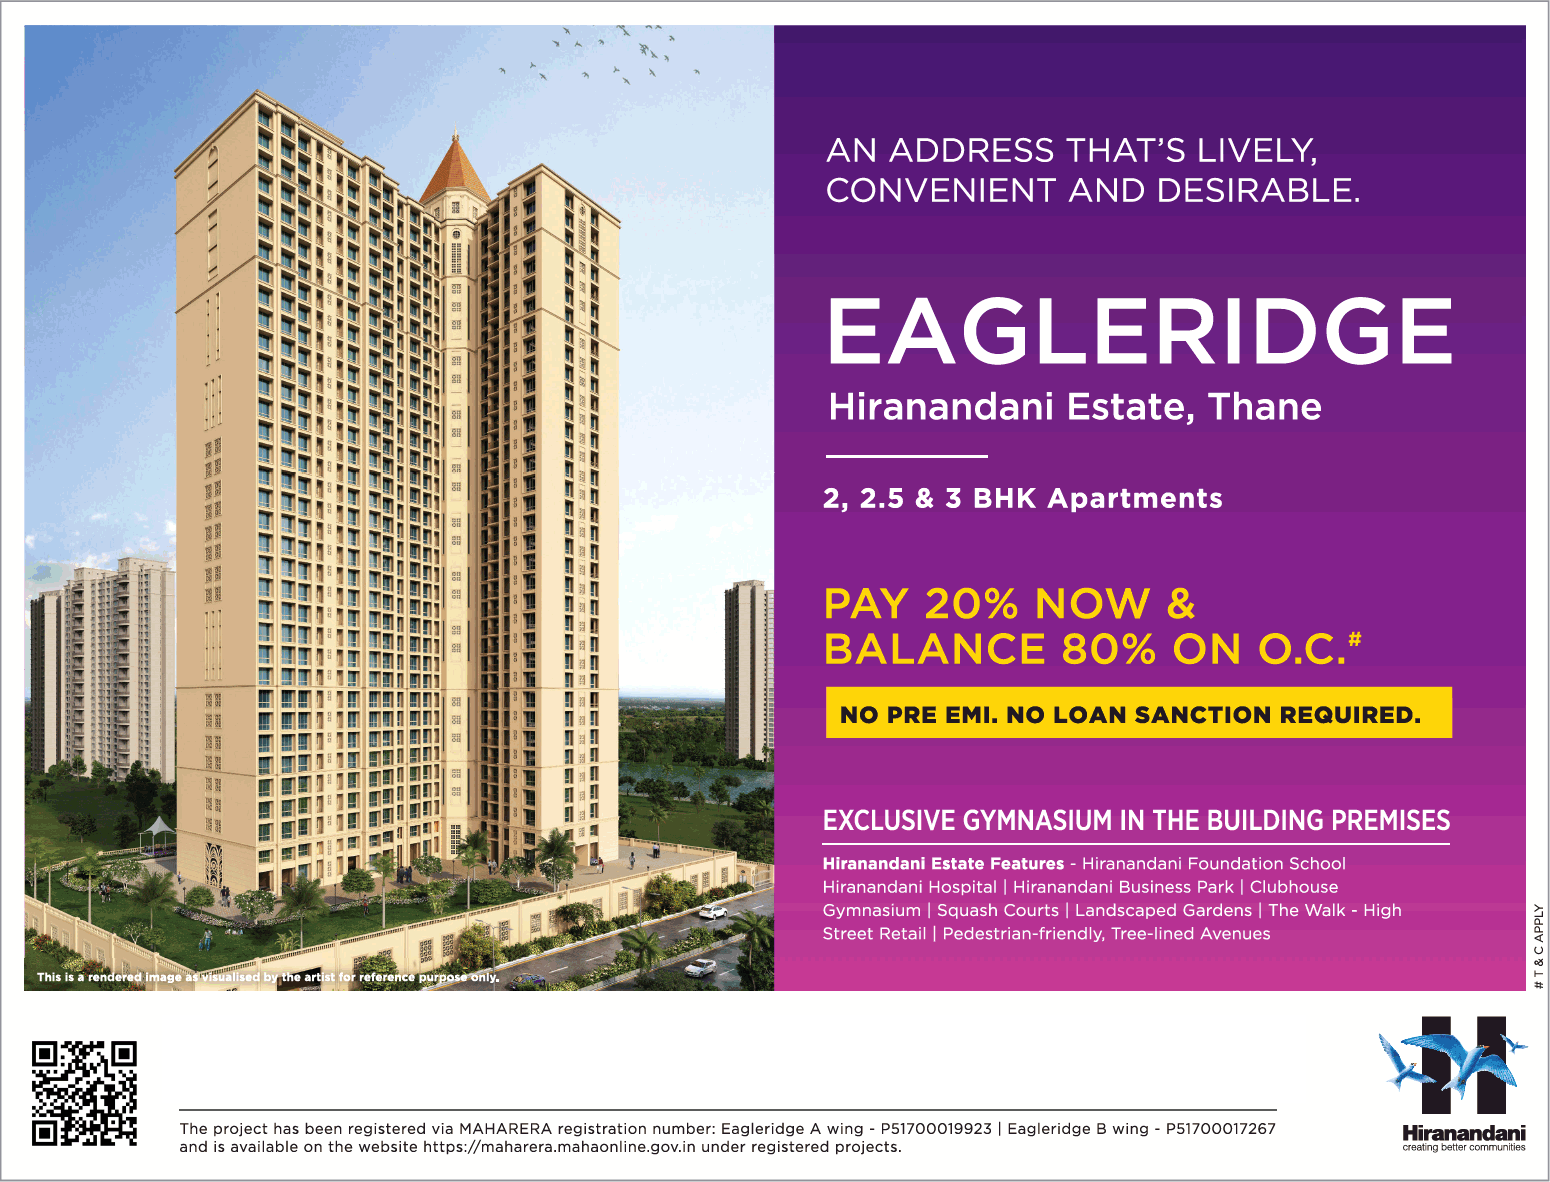 Pay 20% now & balance 80% on OC at Hiranandani Eagleridge in Mumbai